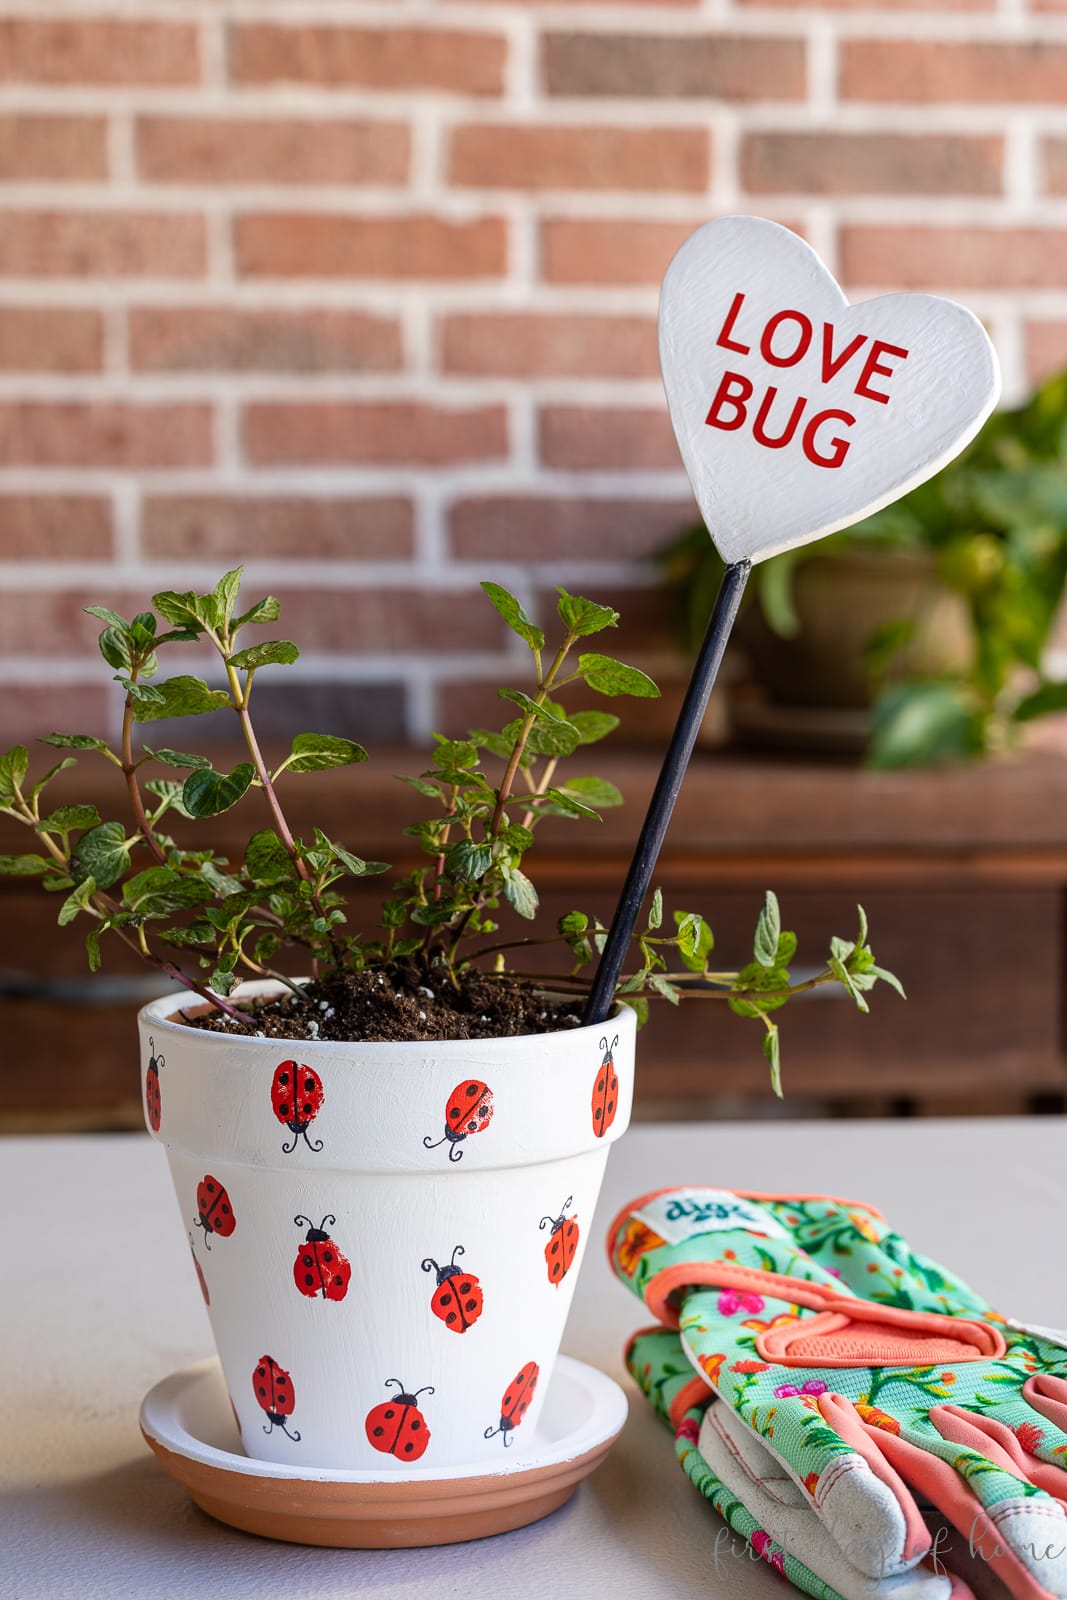 Flower pot with ladybug fingerprint design and garden stake reading "Love Bug" shown with gardening gloves